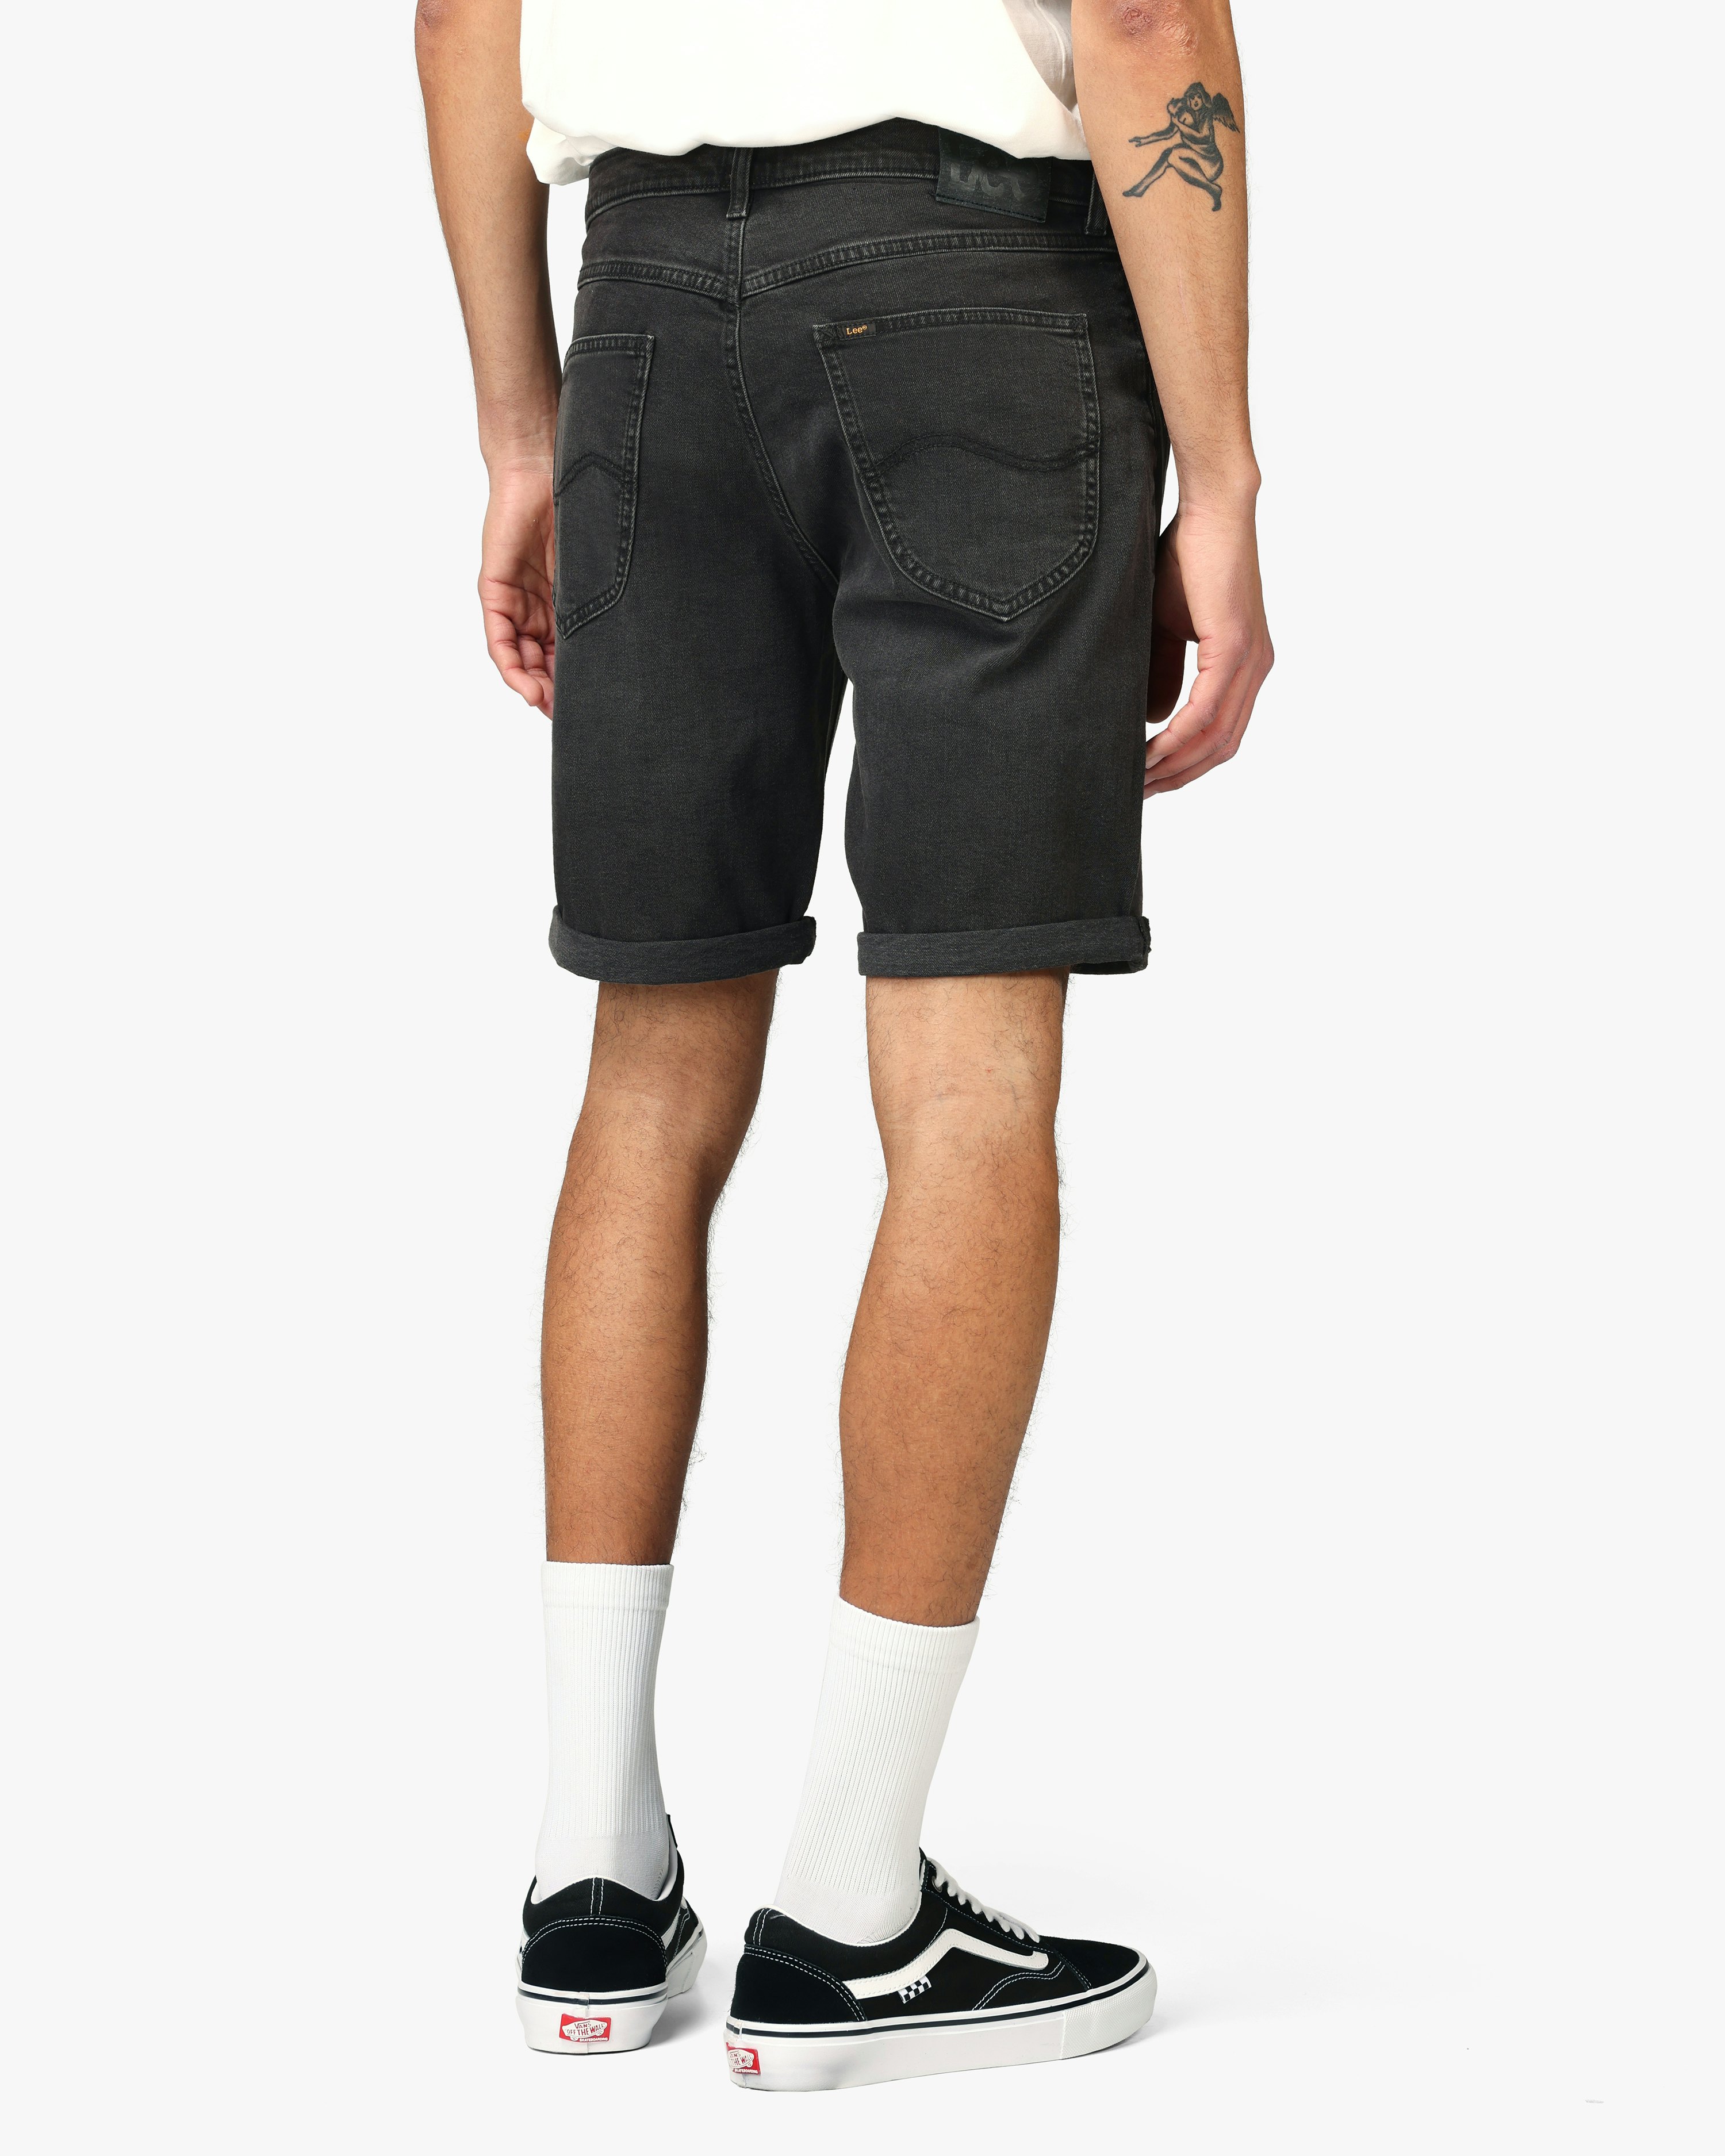 Lee 5 Pocket Black Shorts | Men | at Carlings.com